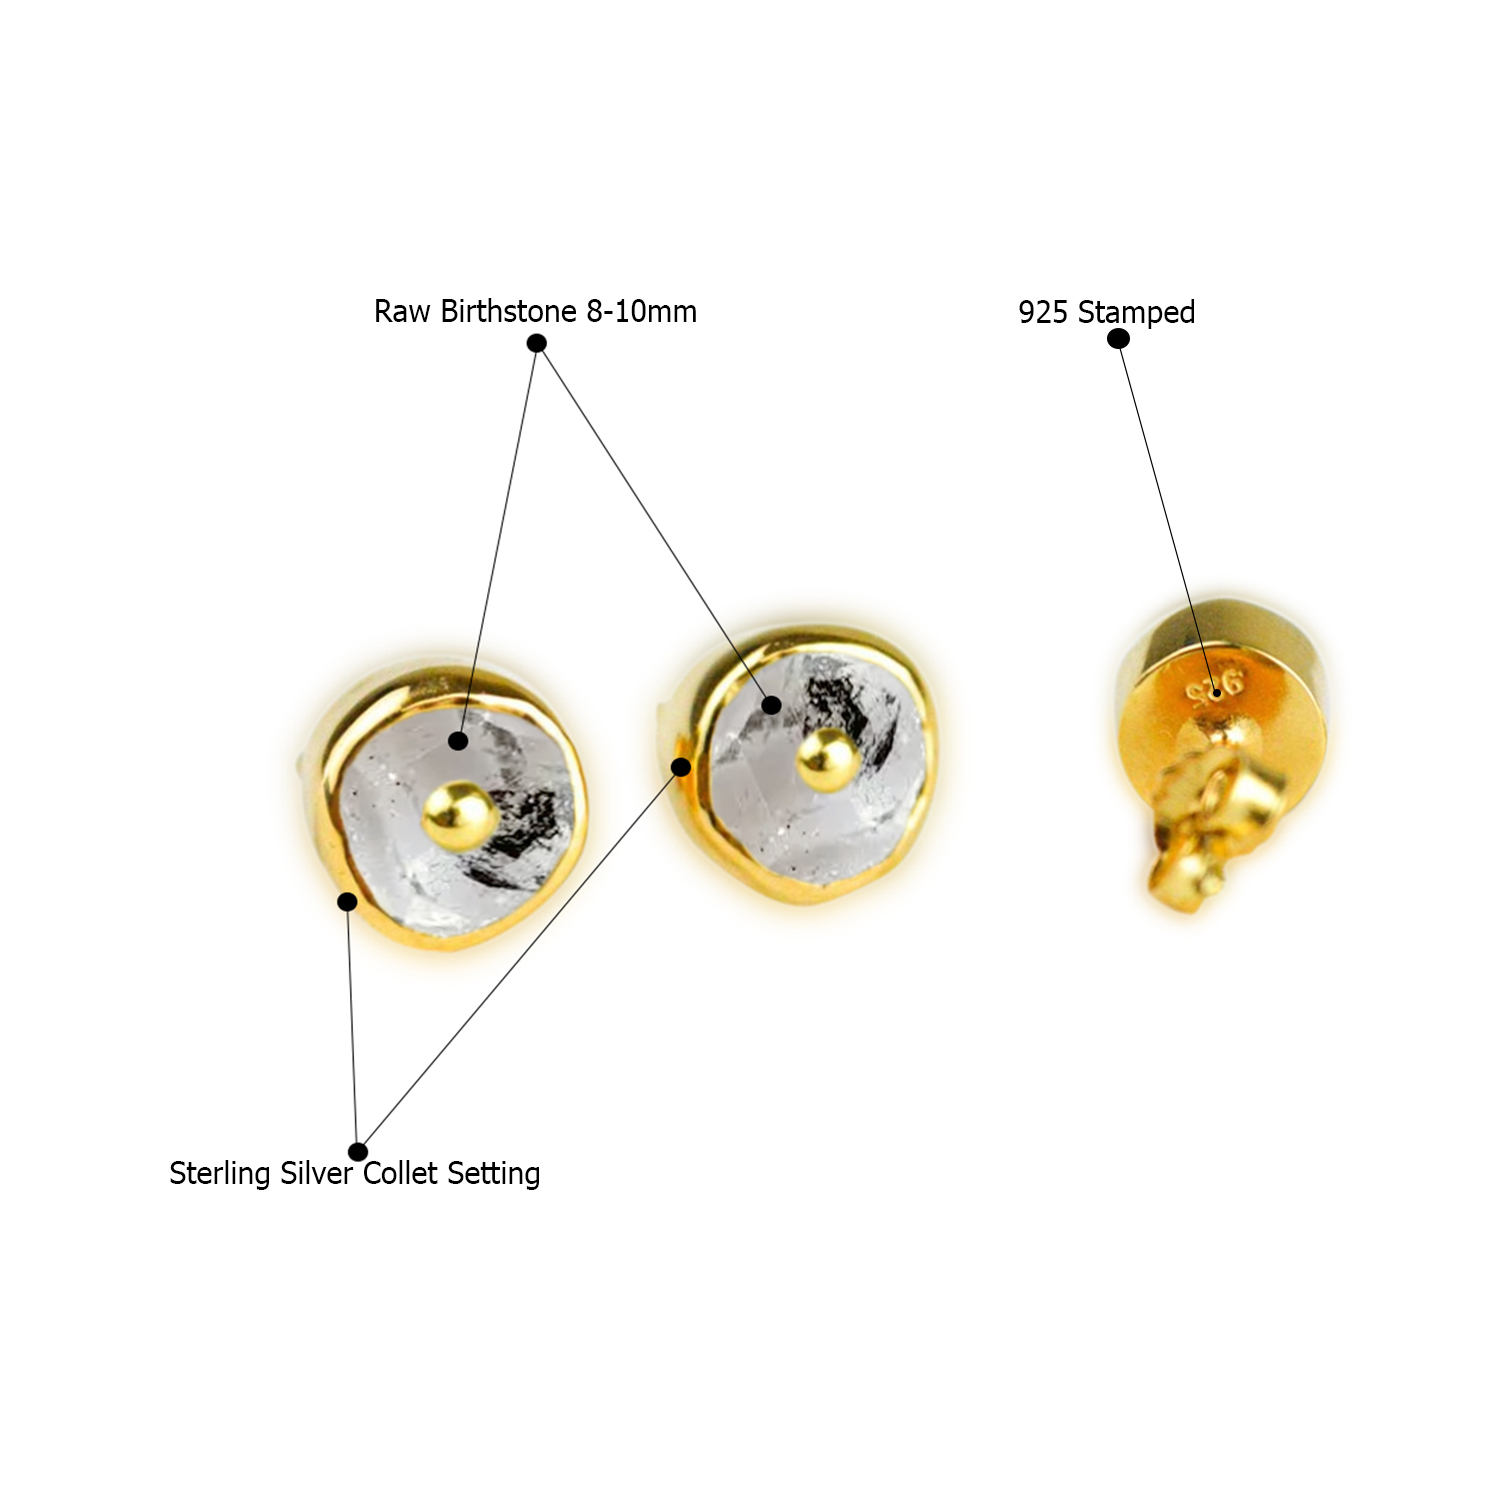 Natural Raw Birthstone Size 8-10mm Gold Vermeil 925 Sterling Silver Bezel Set Stud Earring